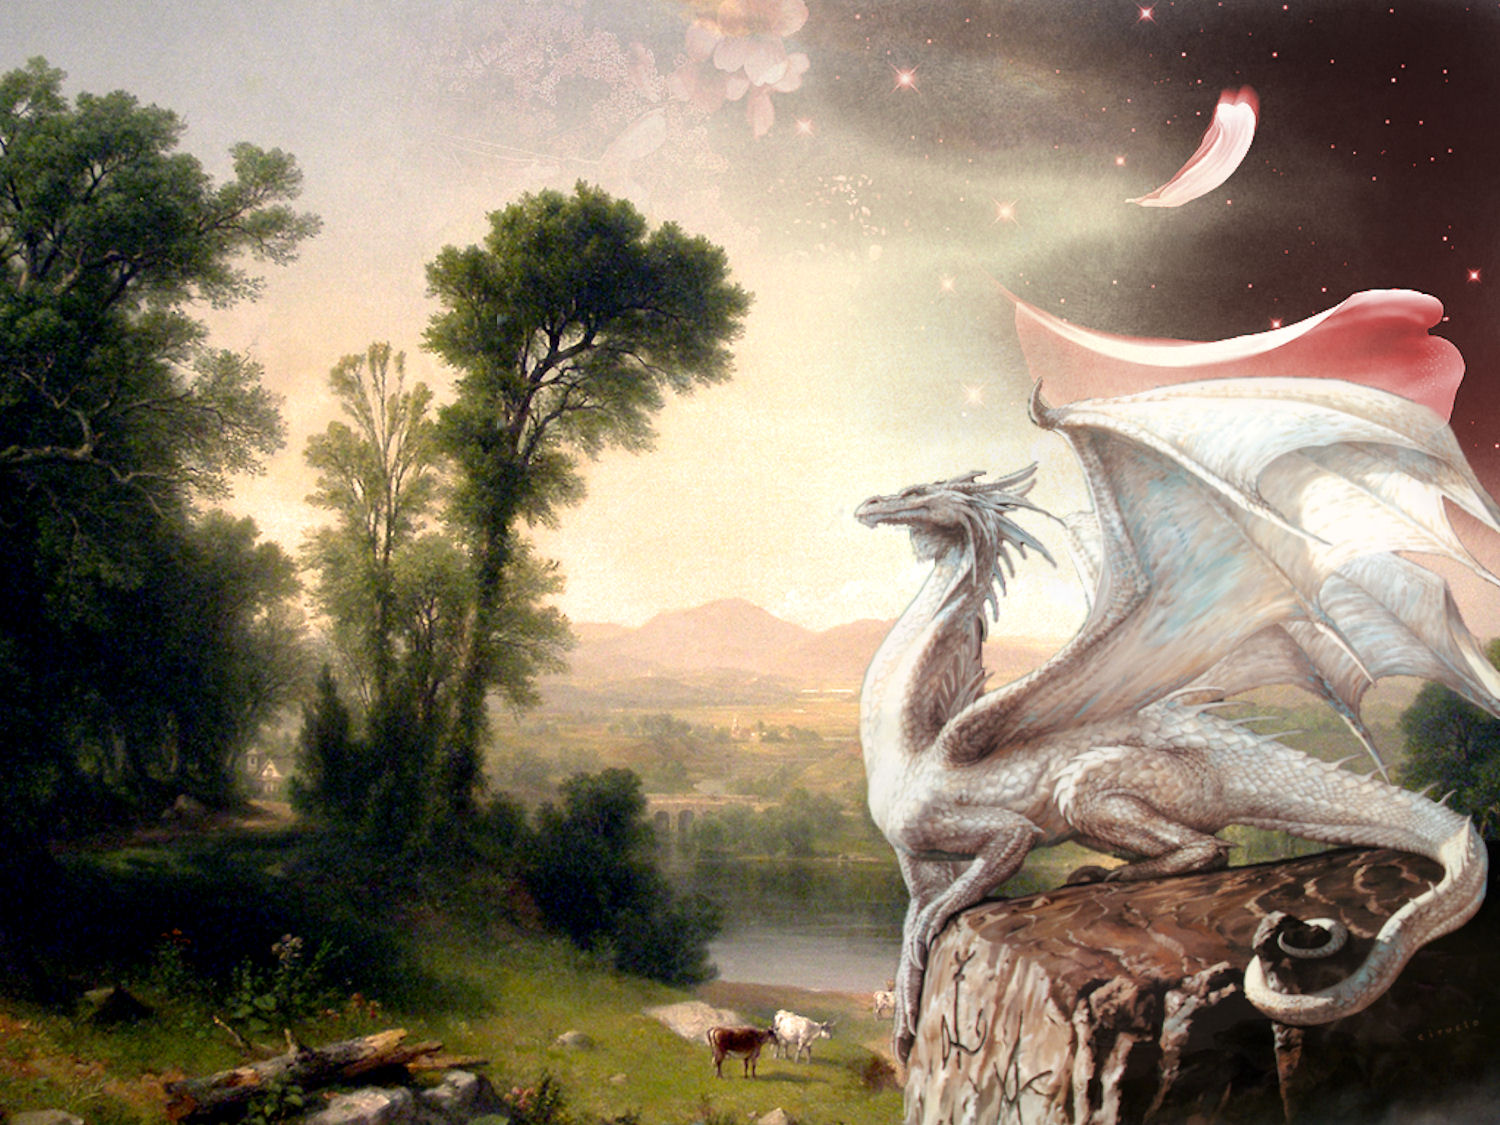 Dragons Fantasy Wallpapers